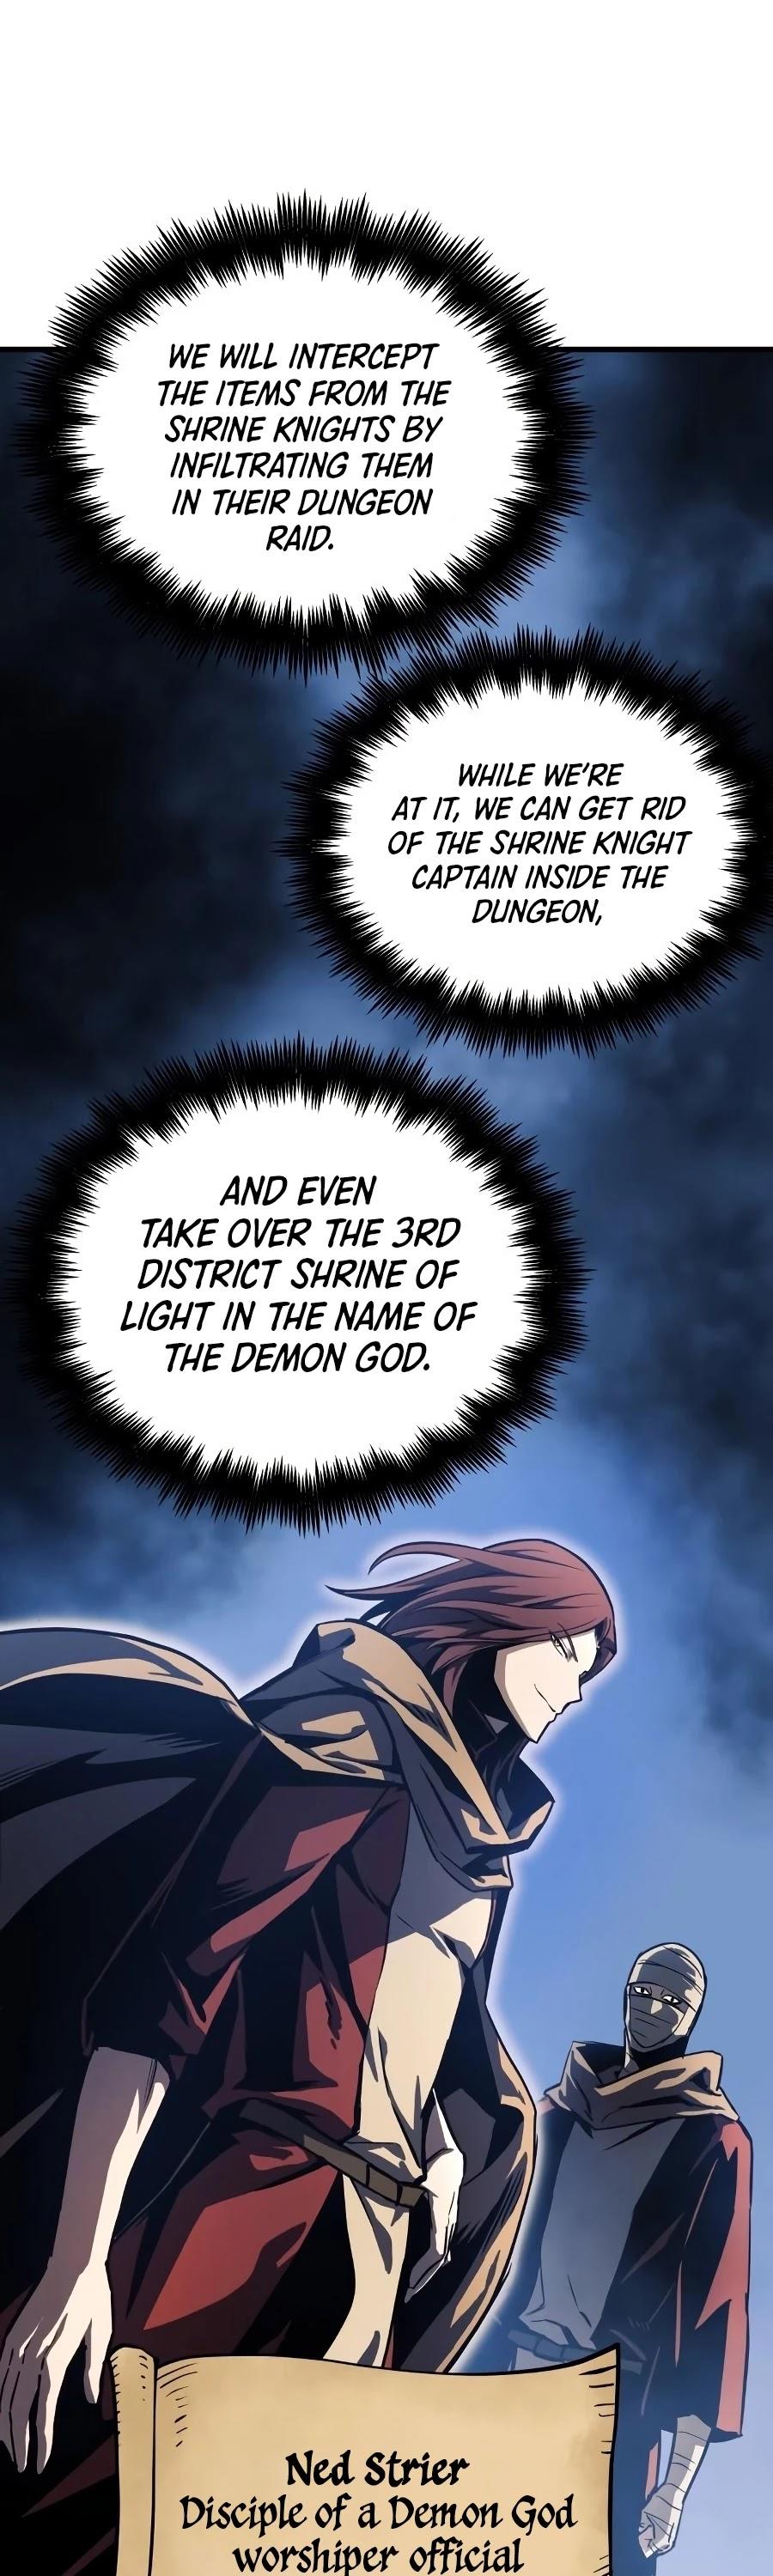 Reincarnation Of The Suicidal Battle God Chapter 8 page 42 - Mangakakalot